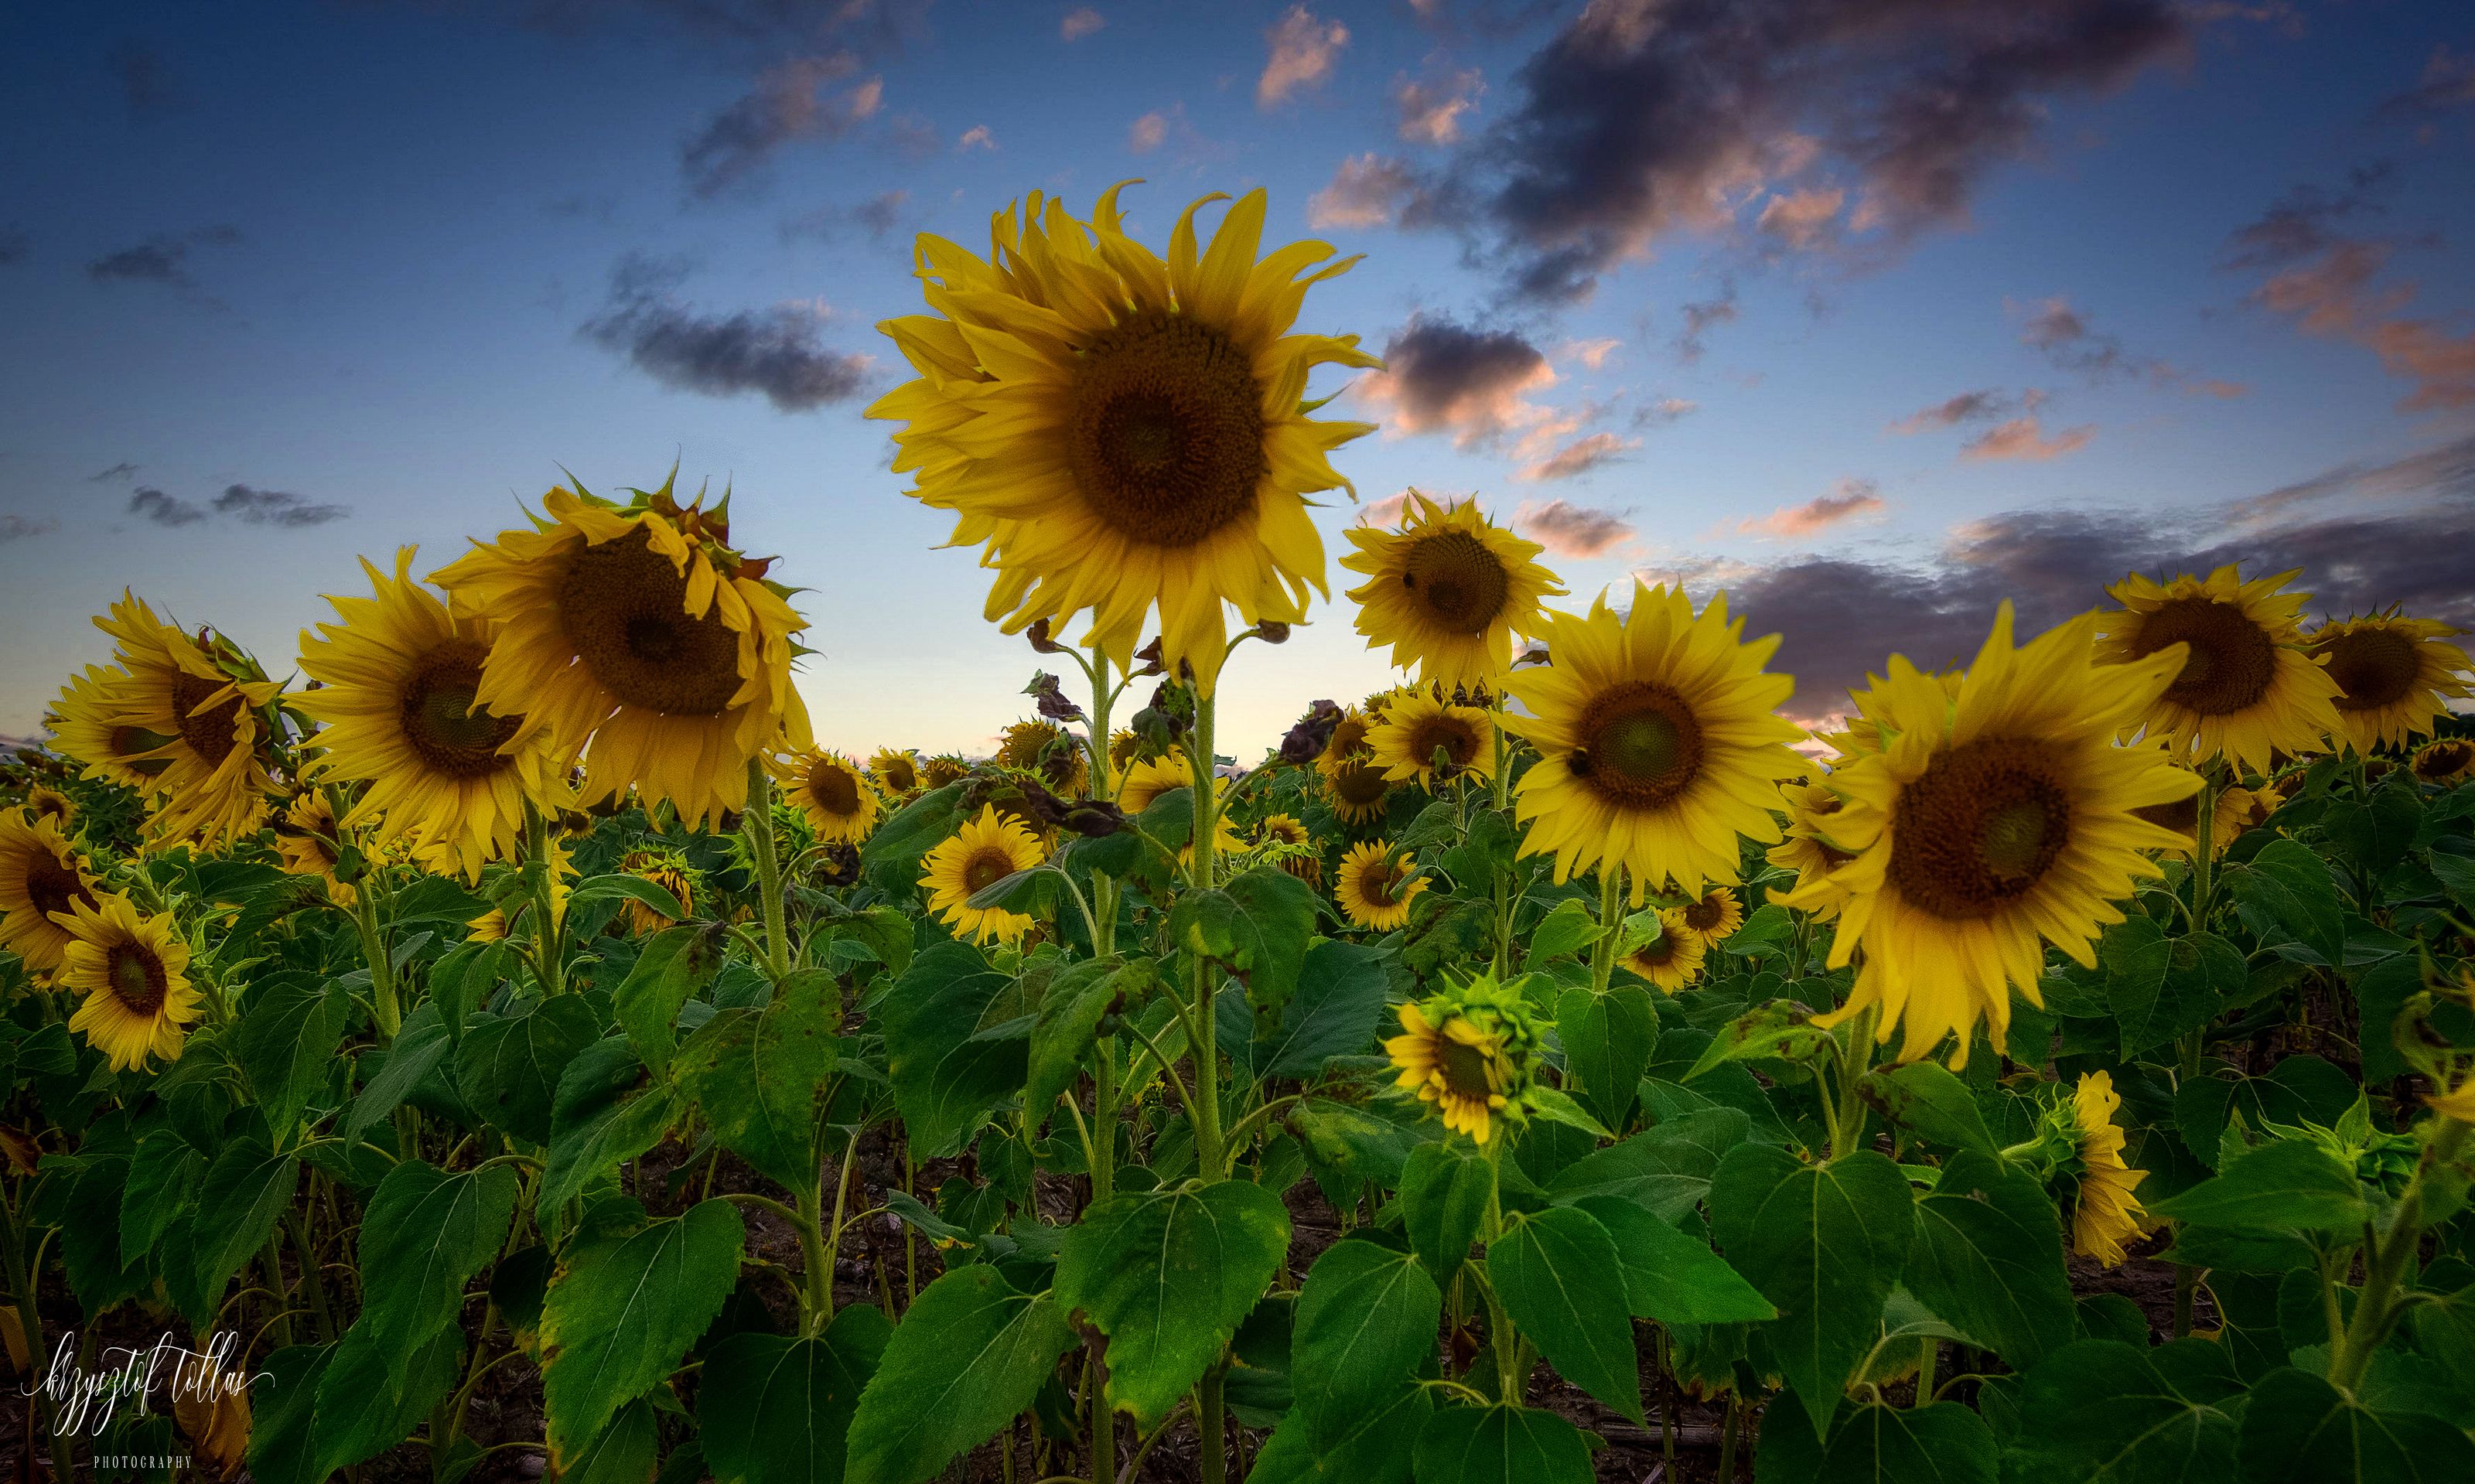 sunflowers flowers nature cultivation agriculture light landscape sky clouds nikon summer, Krzysztof Tollas